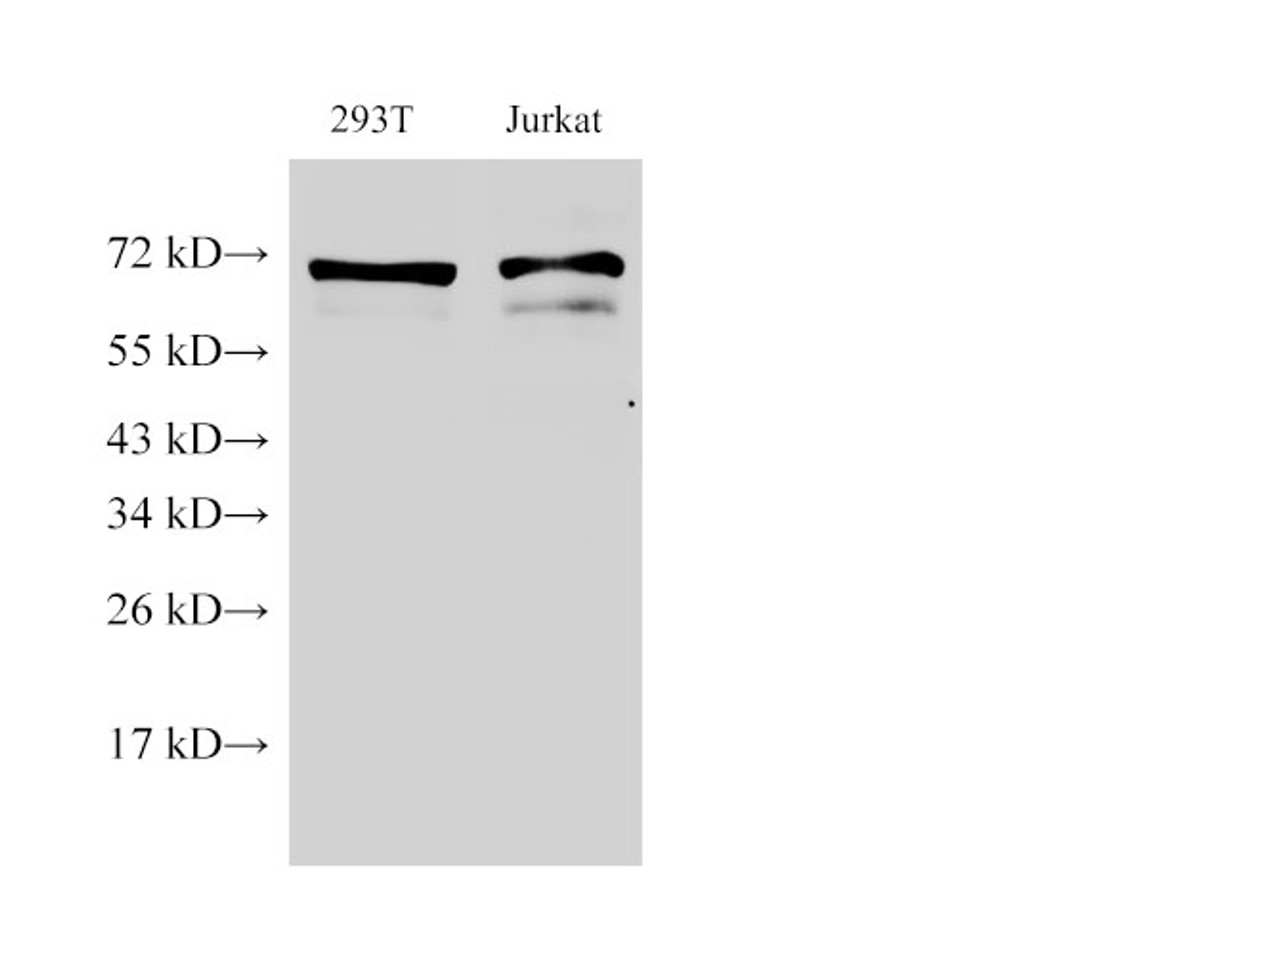 Western Blot analysis of 1)293T, 2)Jurkat using ENG Ployclonal Antibody at dilution of 1:500.